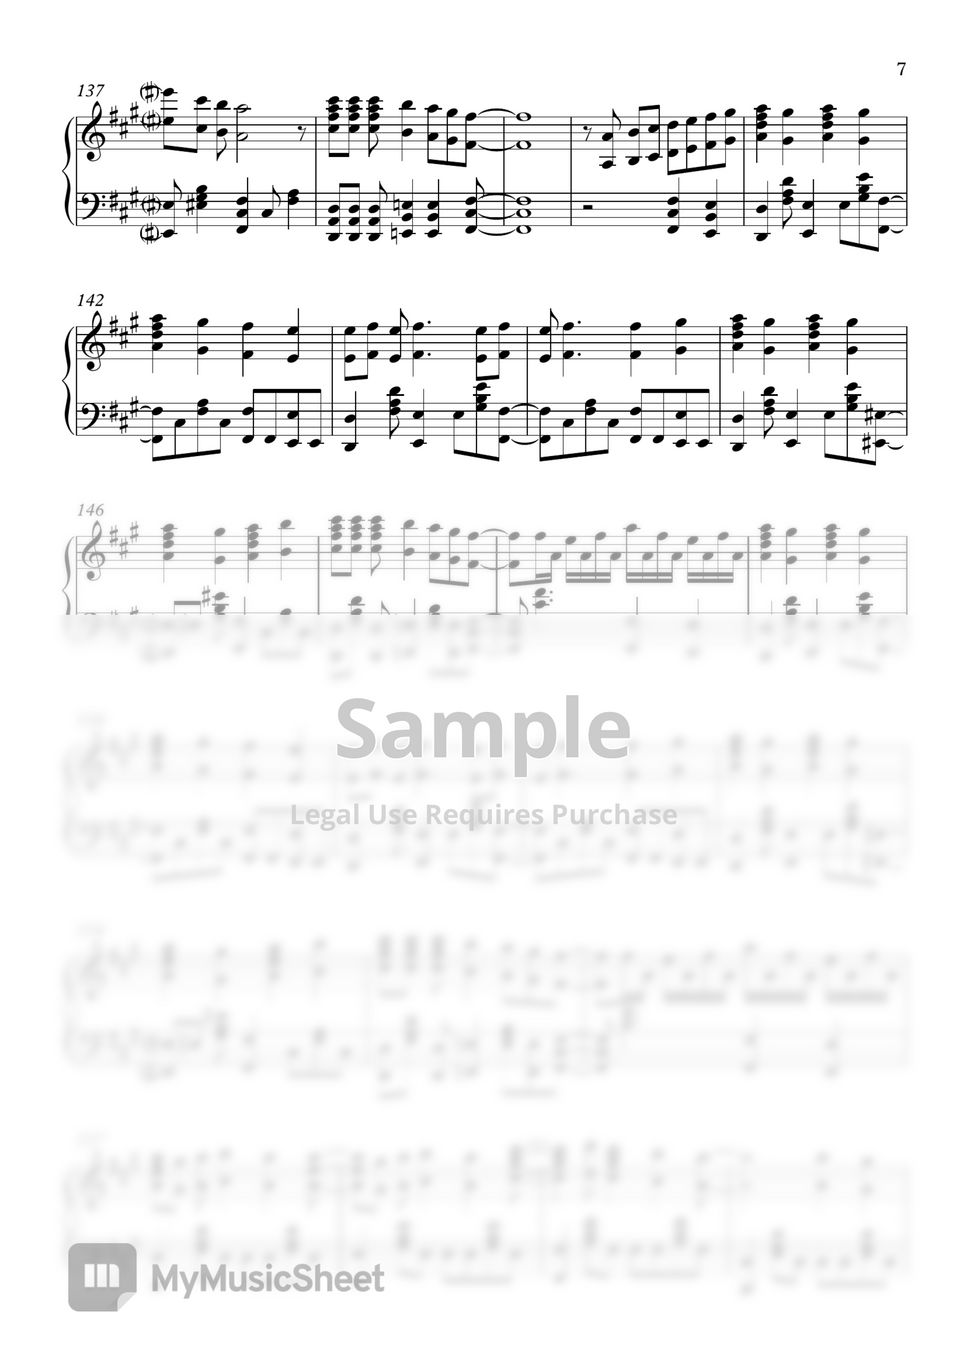 Smart Game Piano Hikaru Nara [intermediate] Sheet Music (Piano